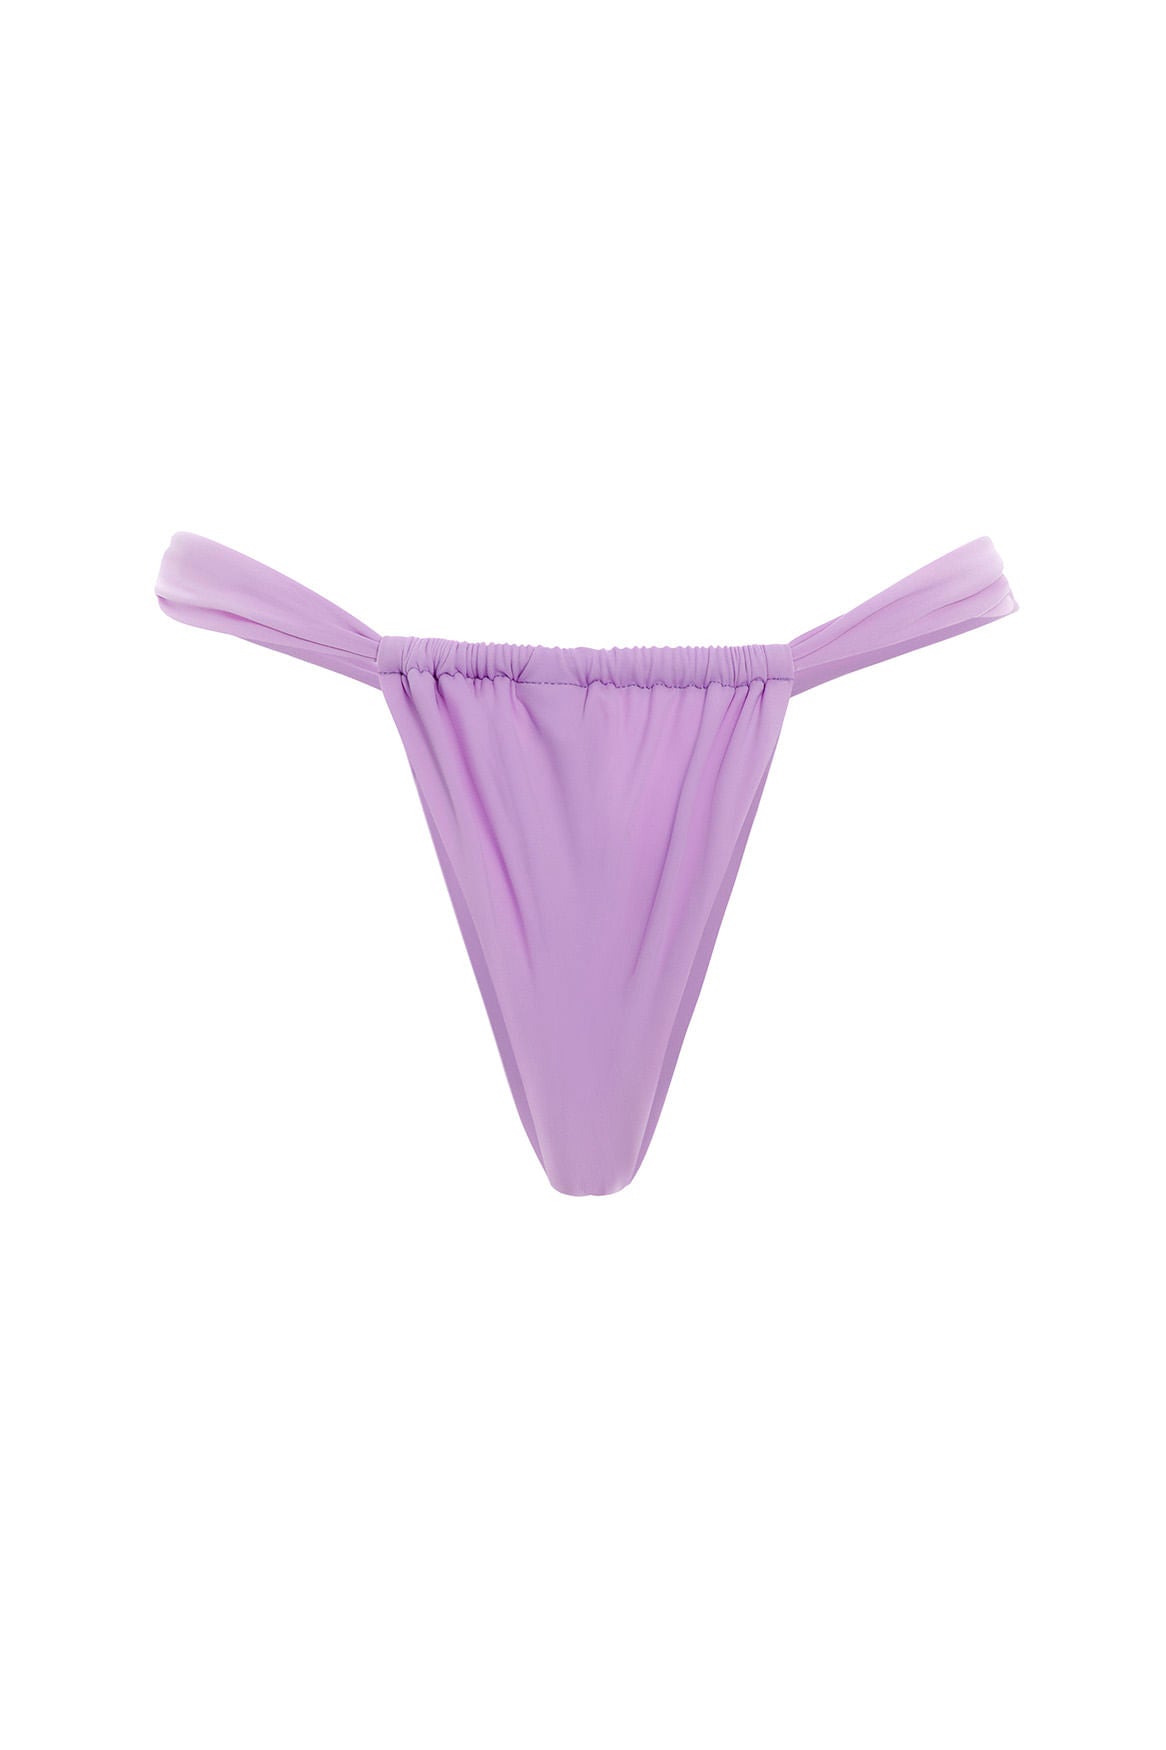 Skimpy Lavender Bikini Bottom